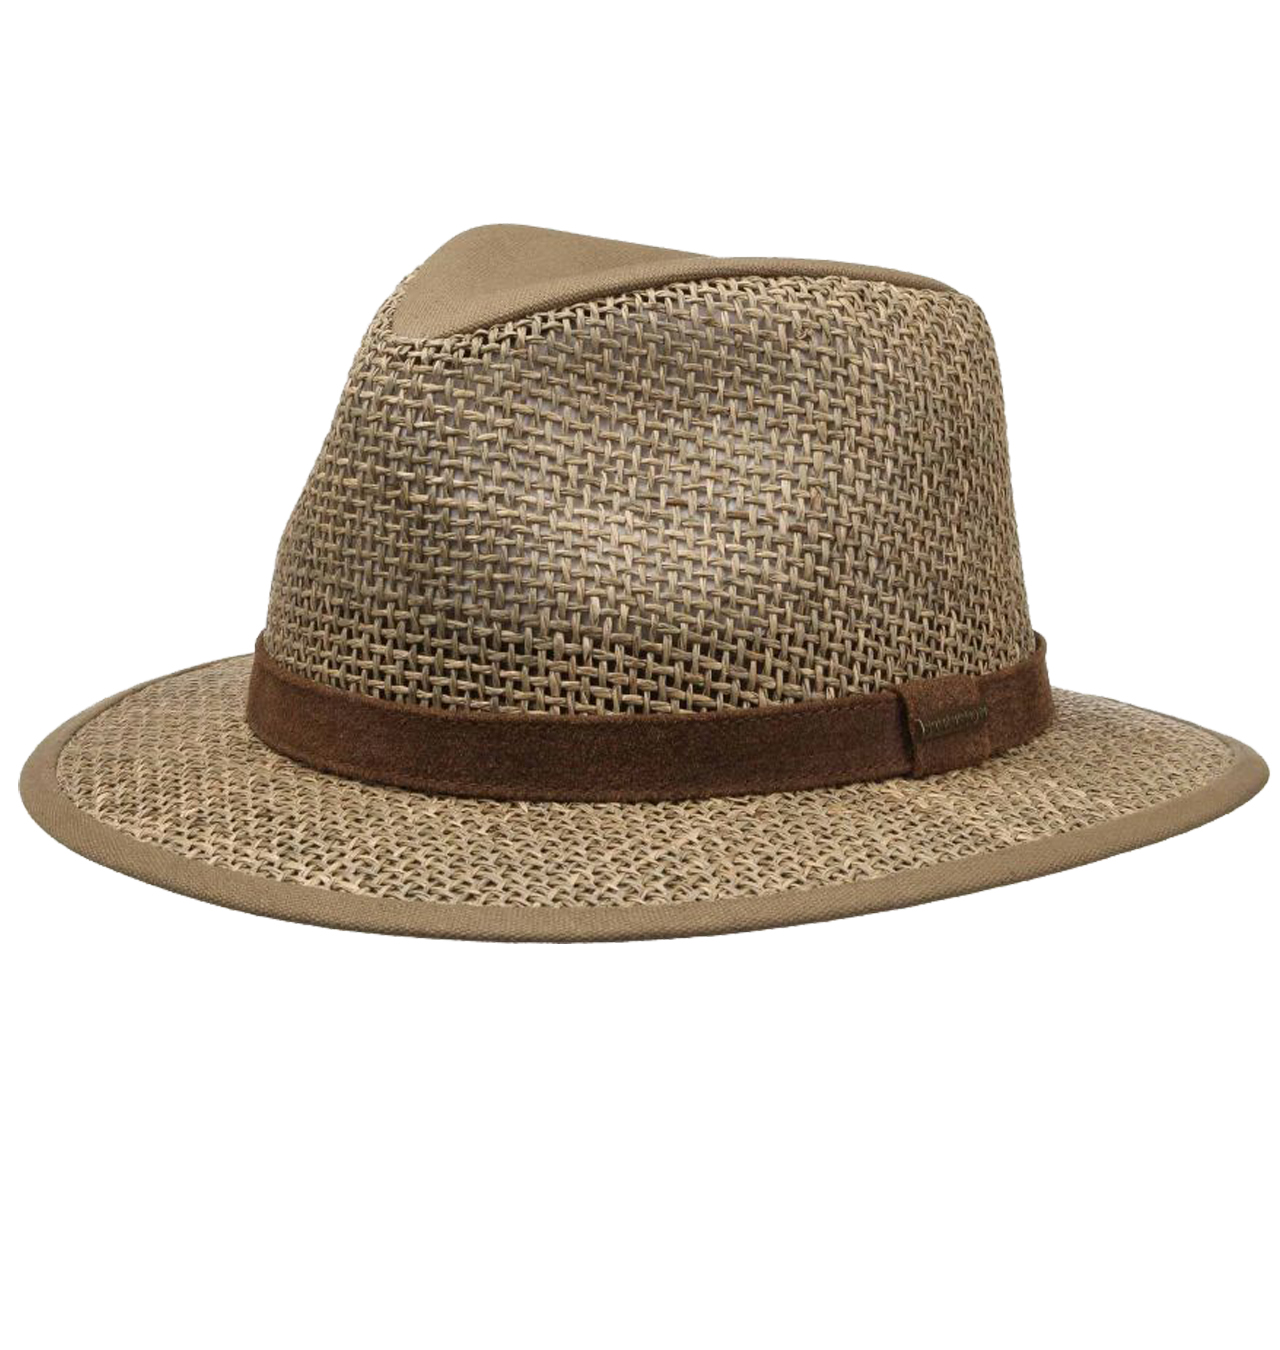 Stetson - Medfield Seagrass Summer Hat - Nature